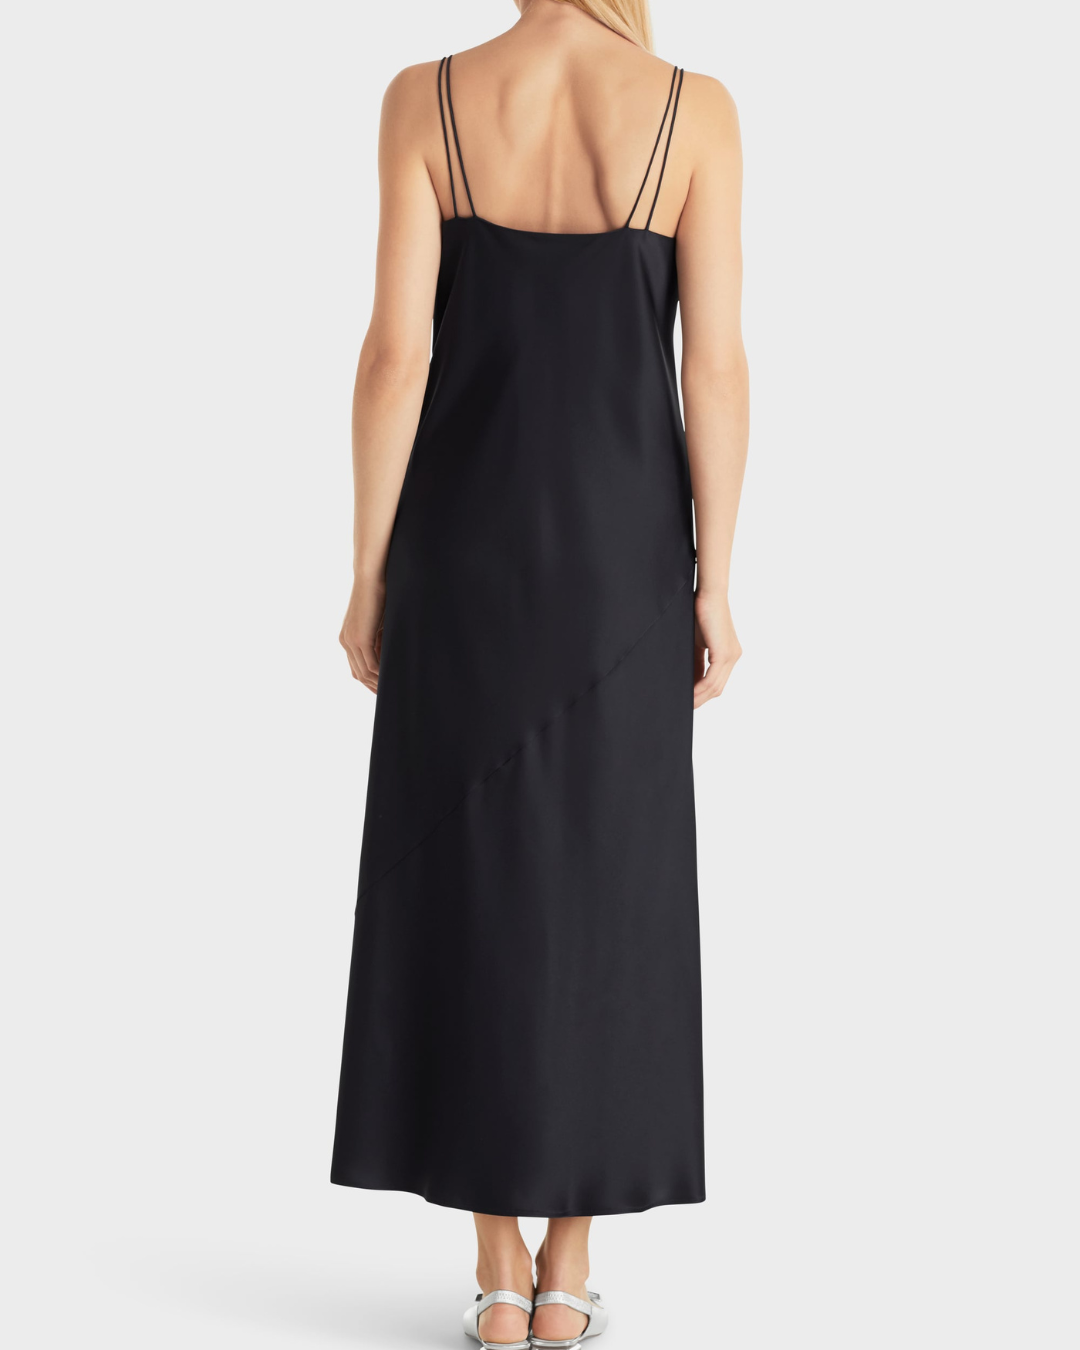 Midi-length strap dress